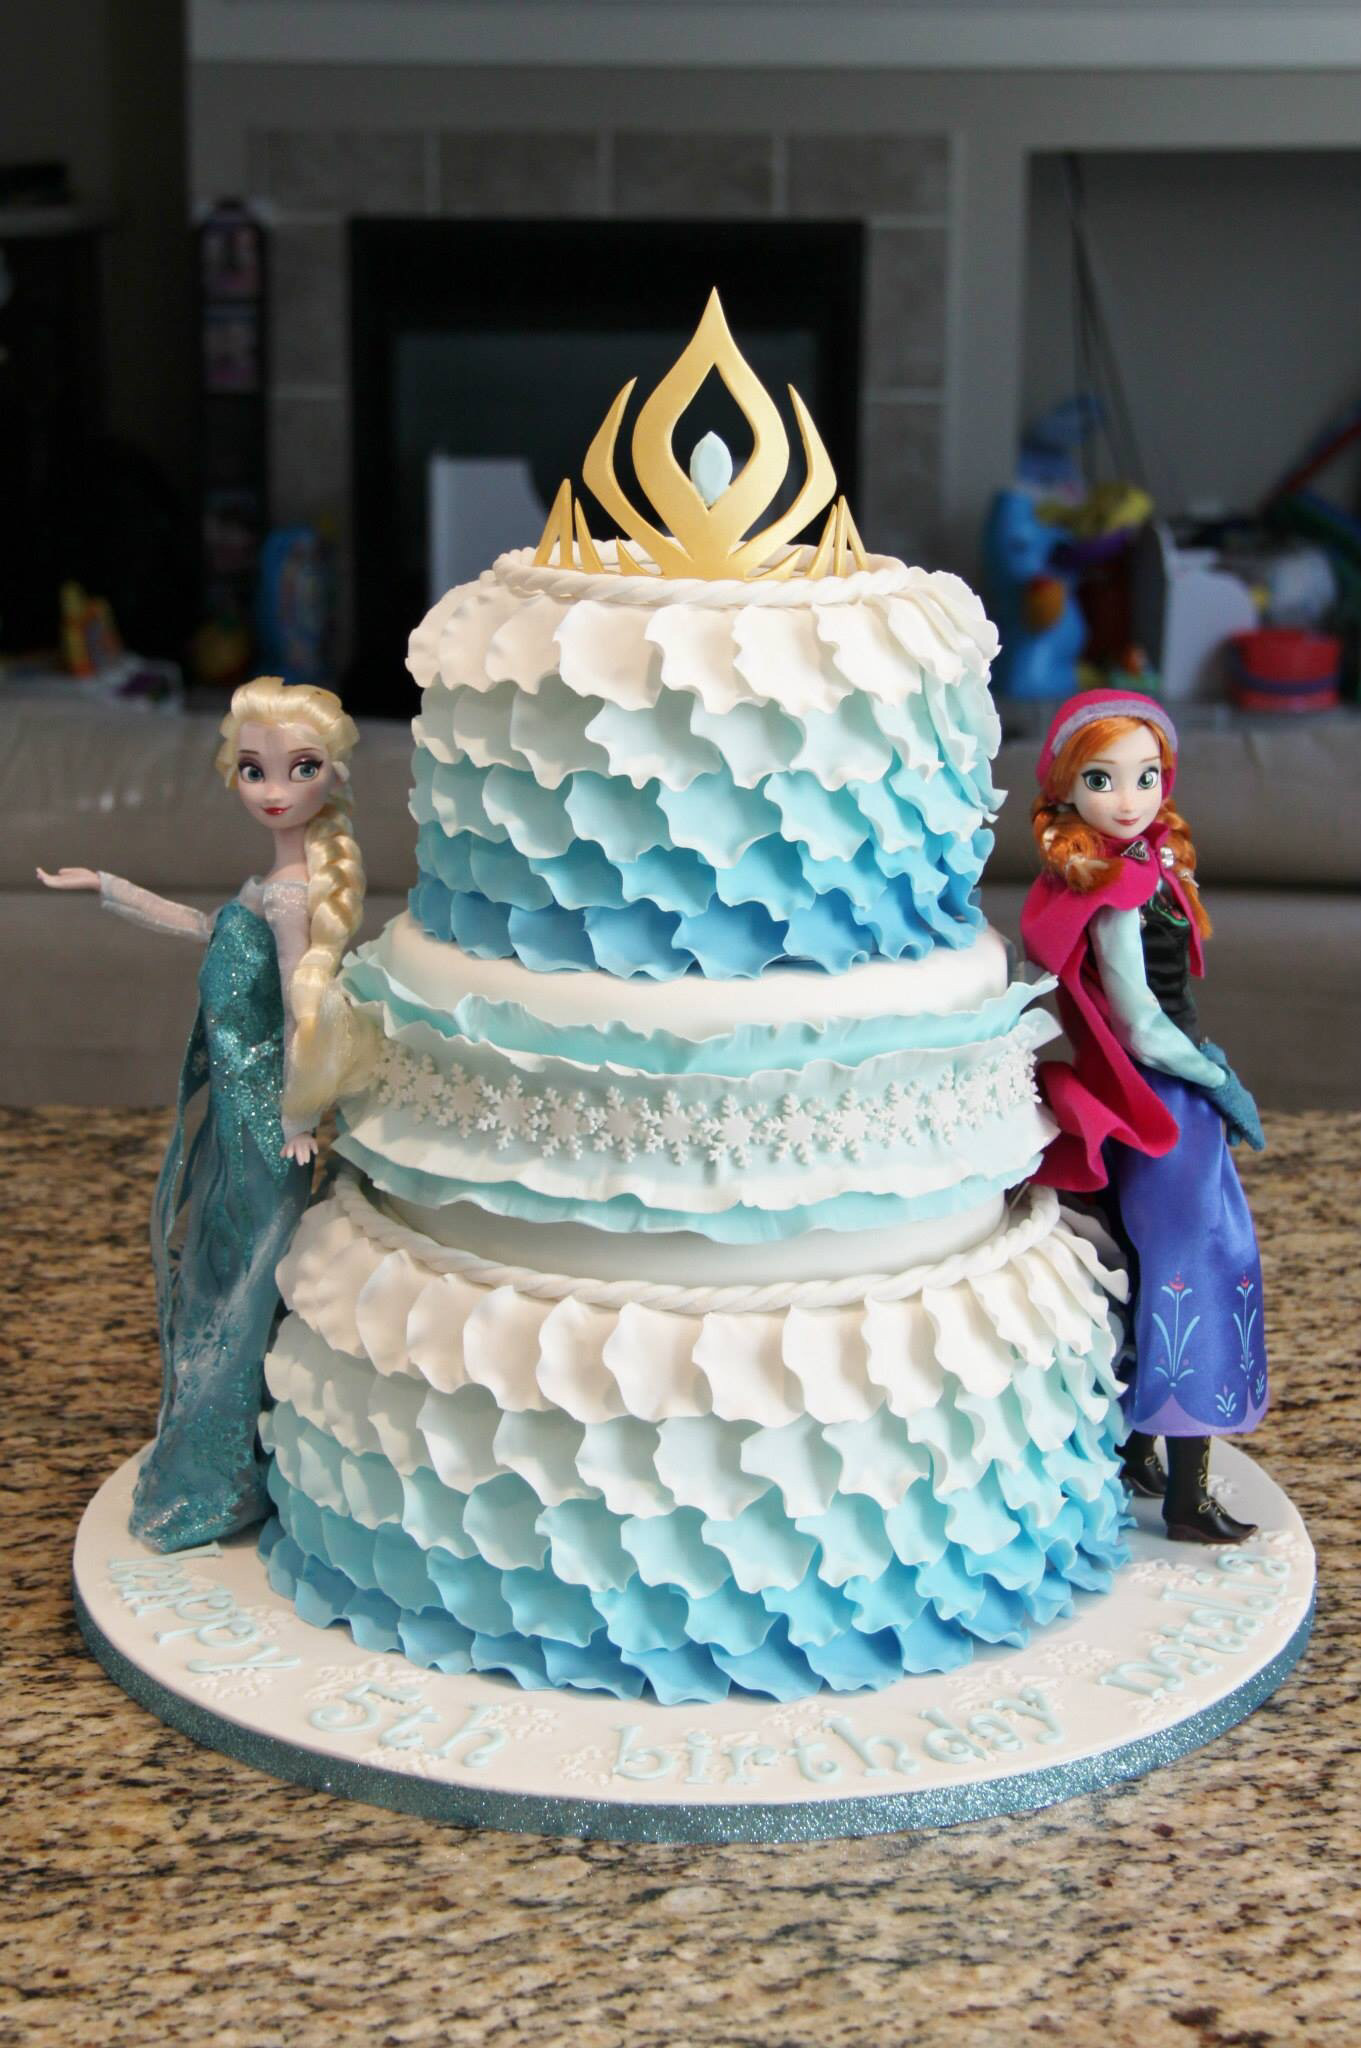 Disney Frozen Birthday Cakes
 Elsa Birthday Cakes